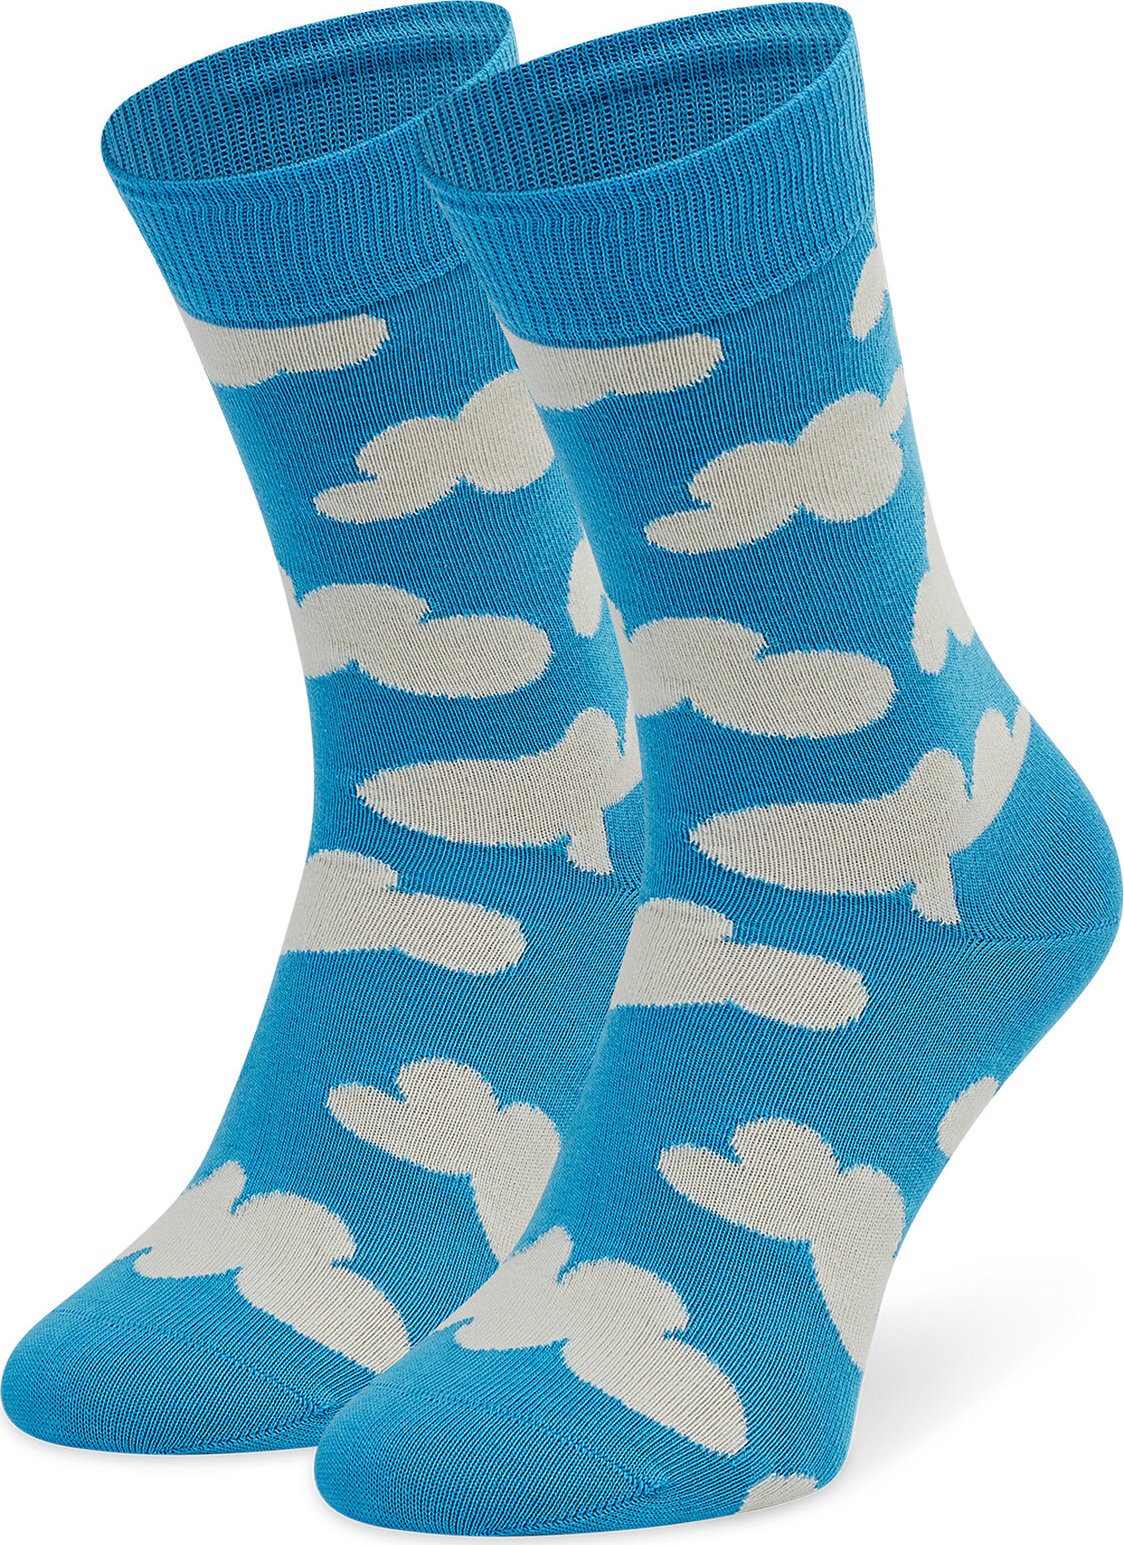 Ponožky Vysoké Unisex Happy Socks CLO01-6700 Modrá